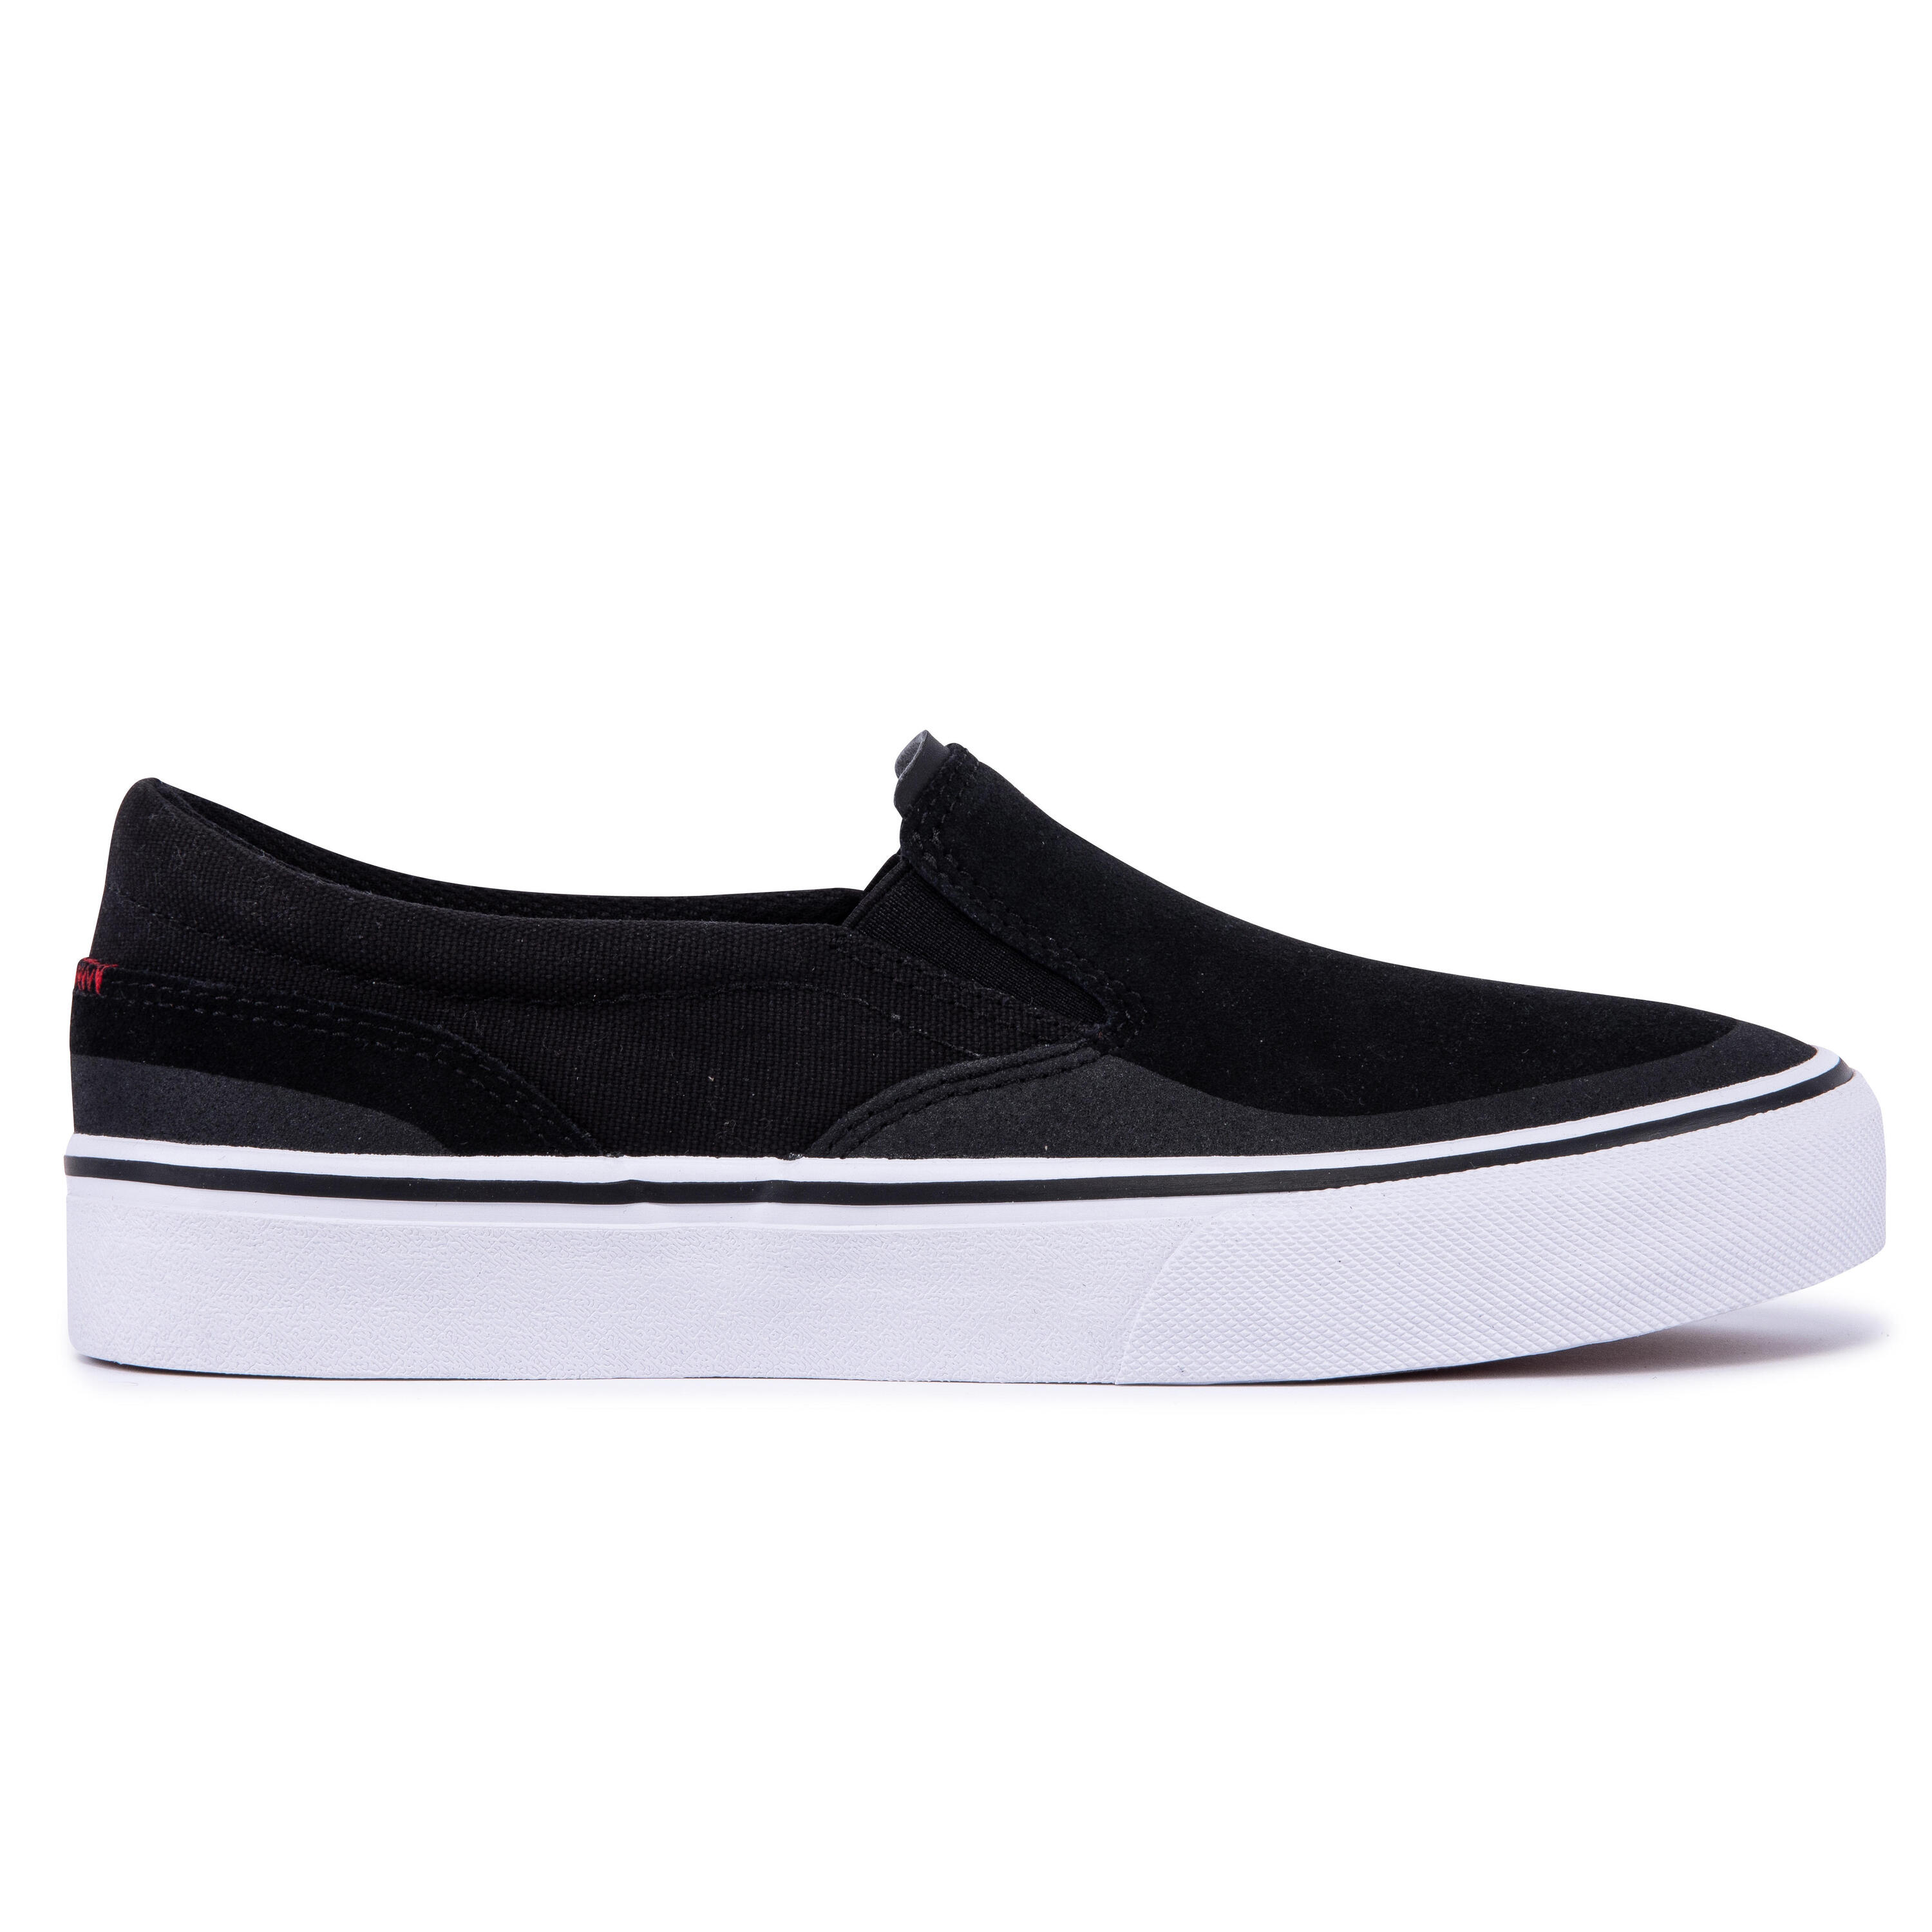 Vulca 500 Adult Low-Top Slip-On Skate Shoes - Black/White 2/12